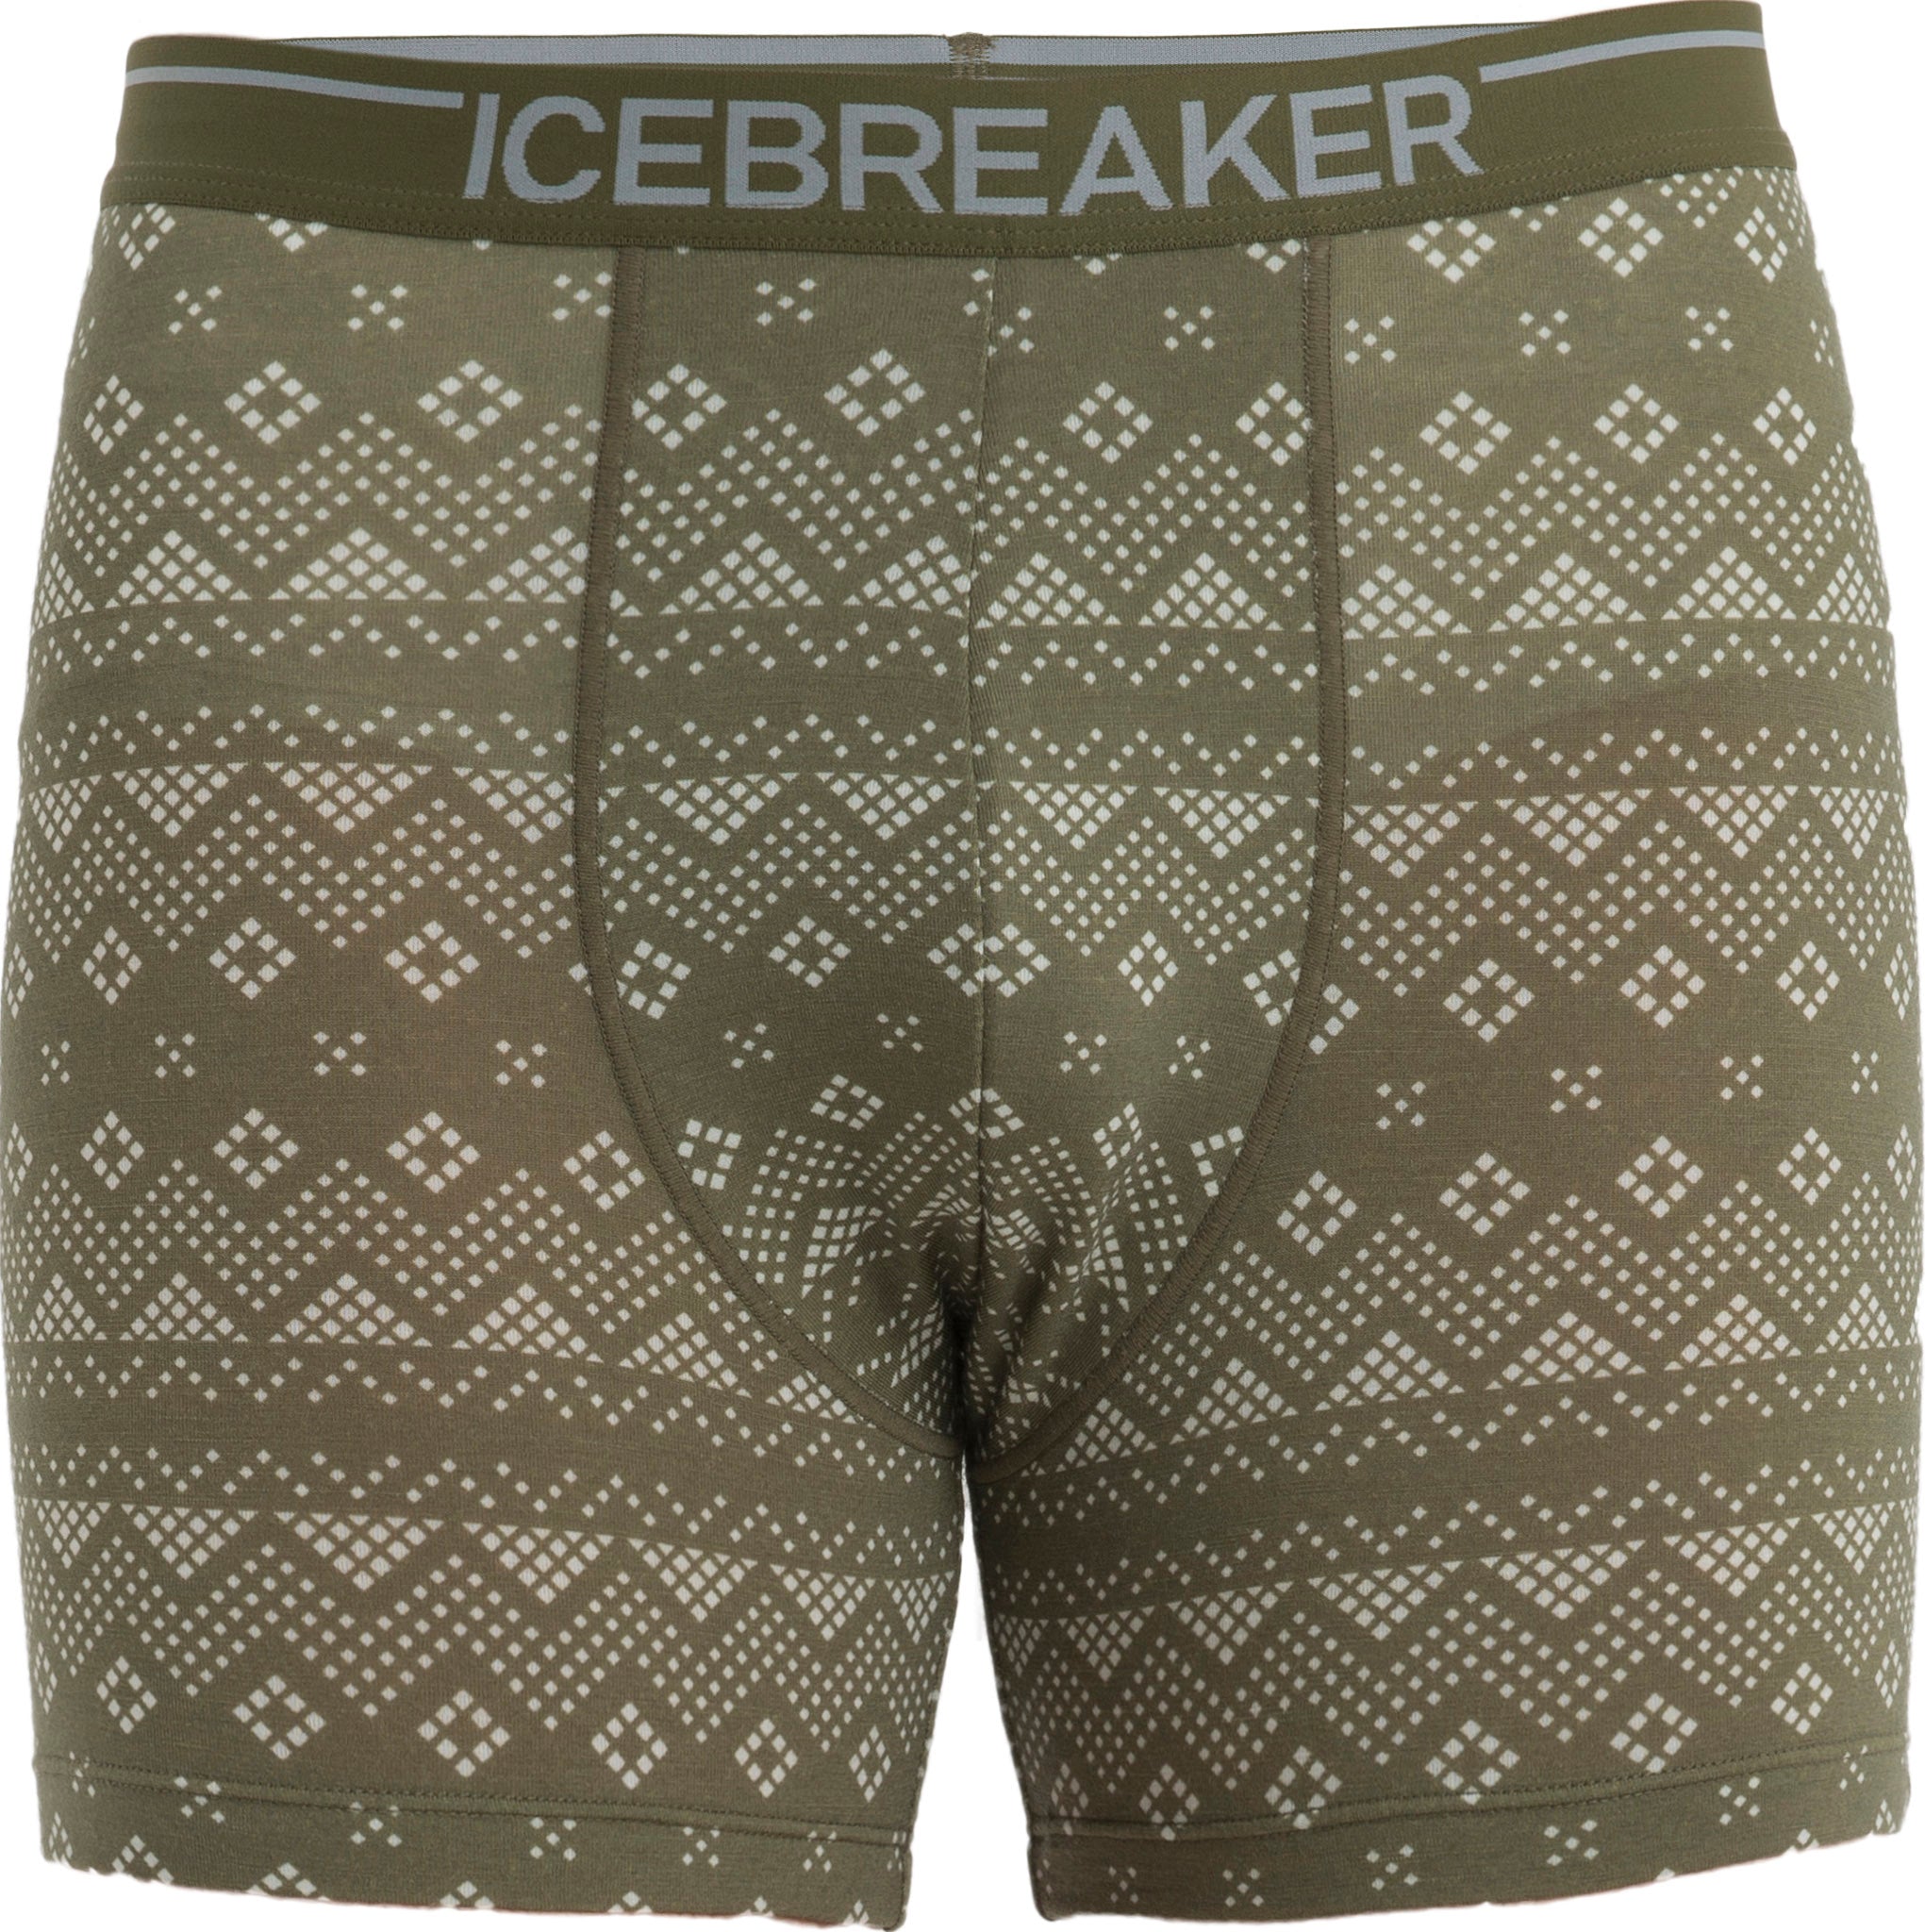 icebreaker 150 Anatomica First Snow Merino Boxers - Men's